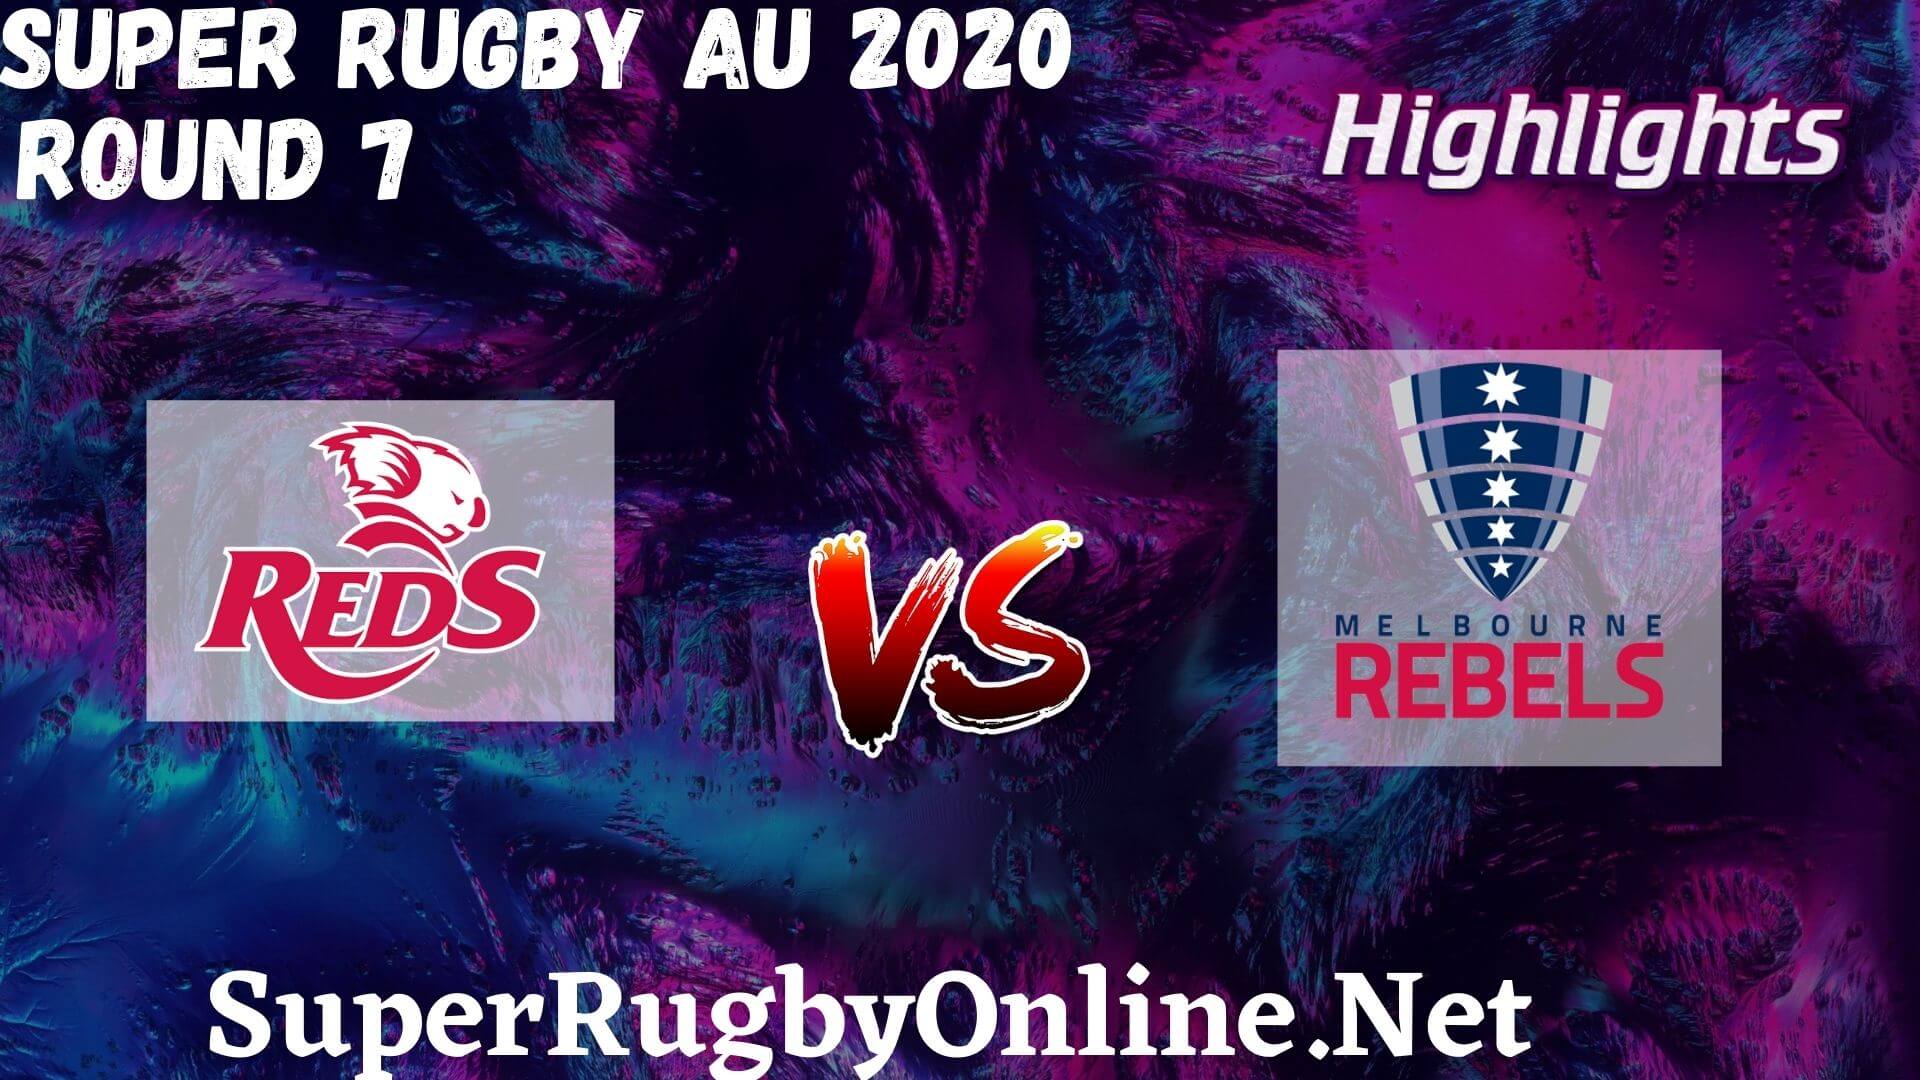 Reds VS Rebels Rd 7 Highlights 2020 Super Rugby Au